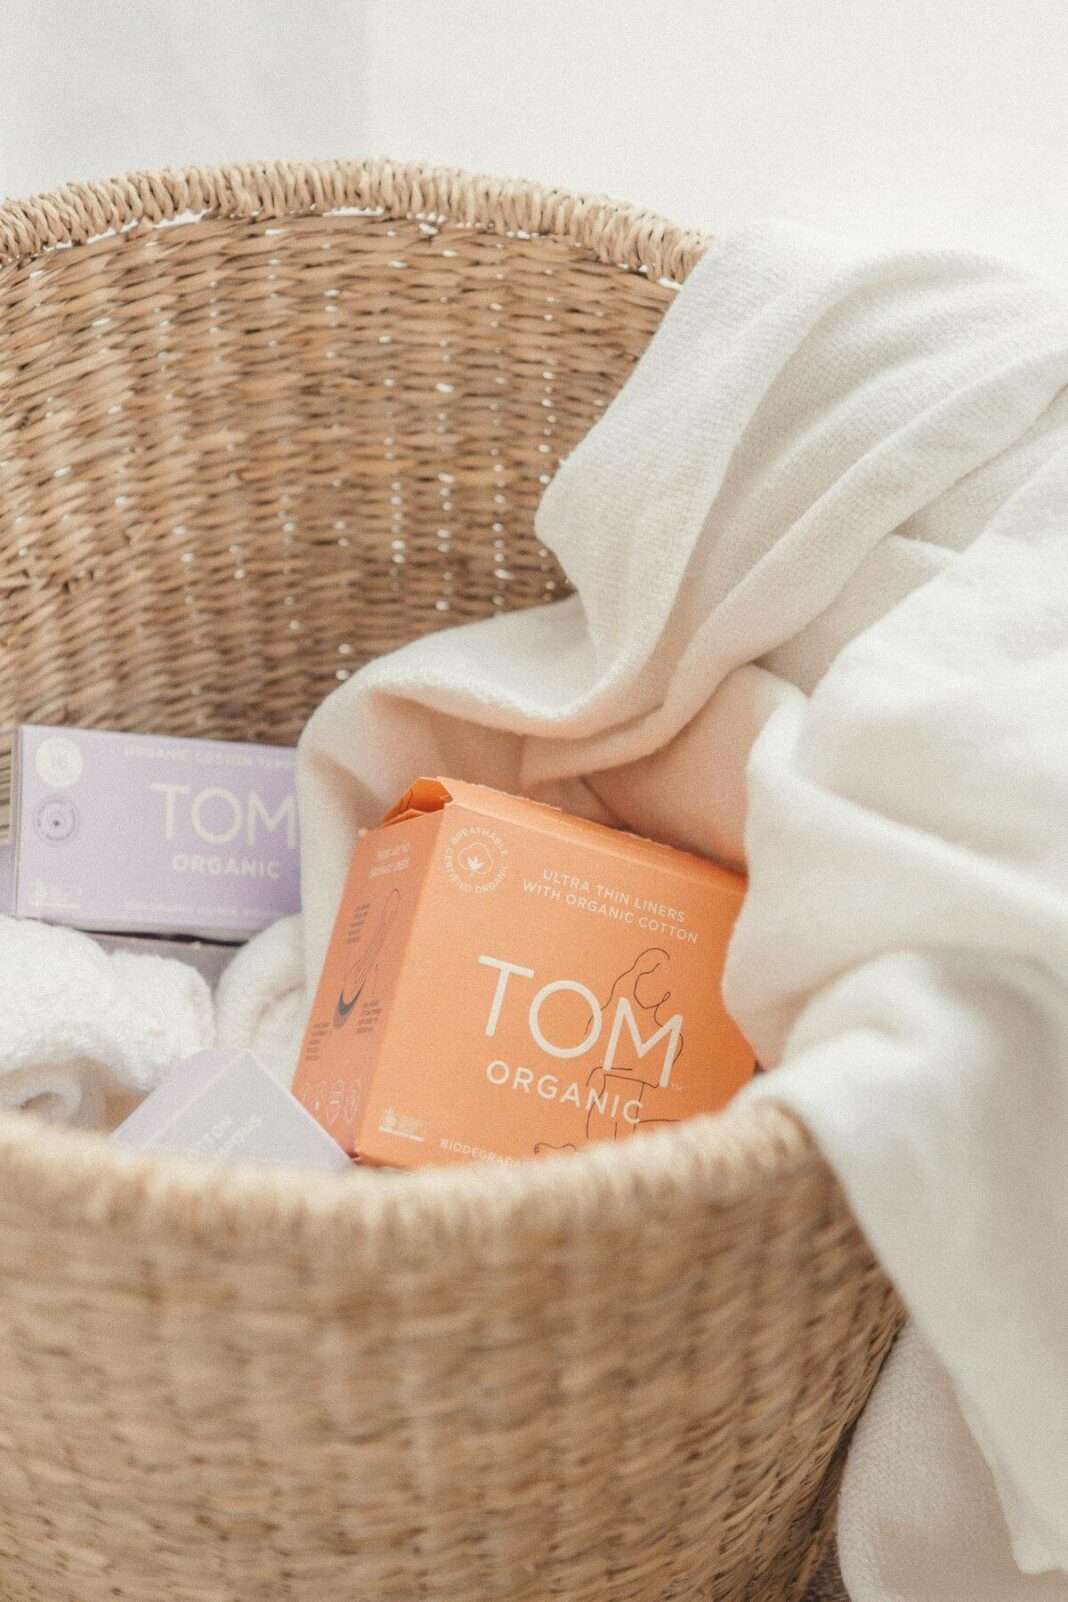 box of TOM Organic tampons